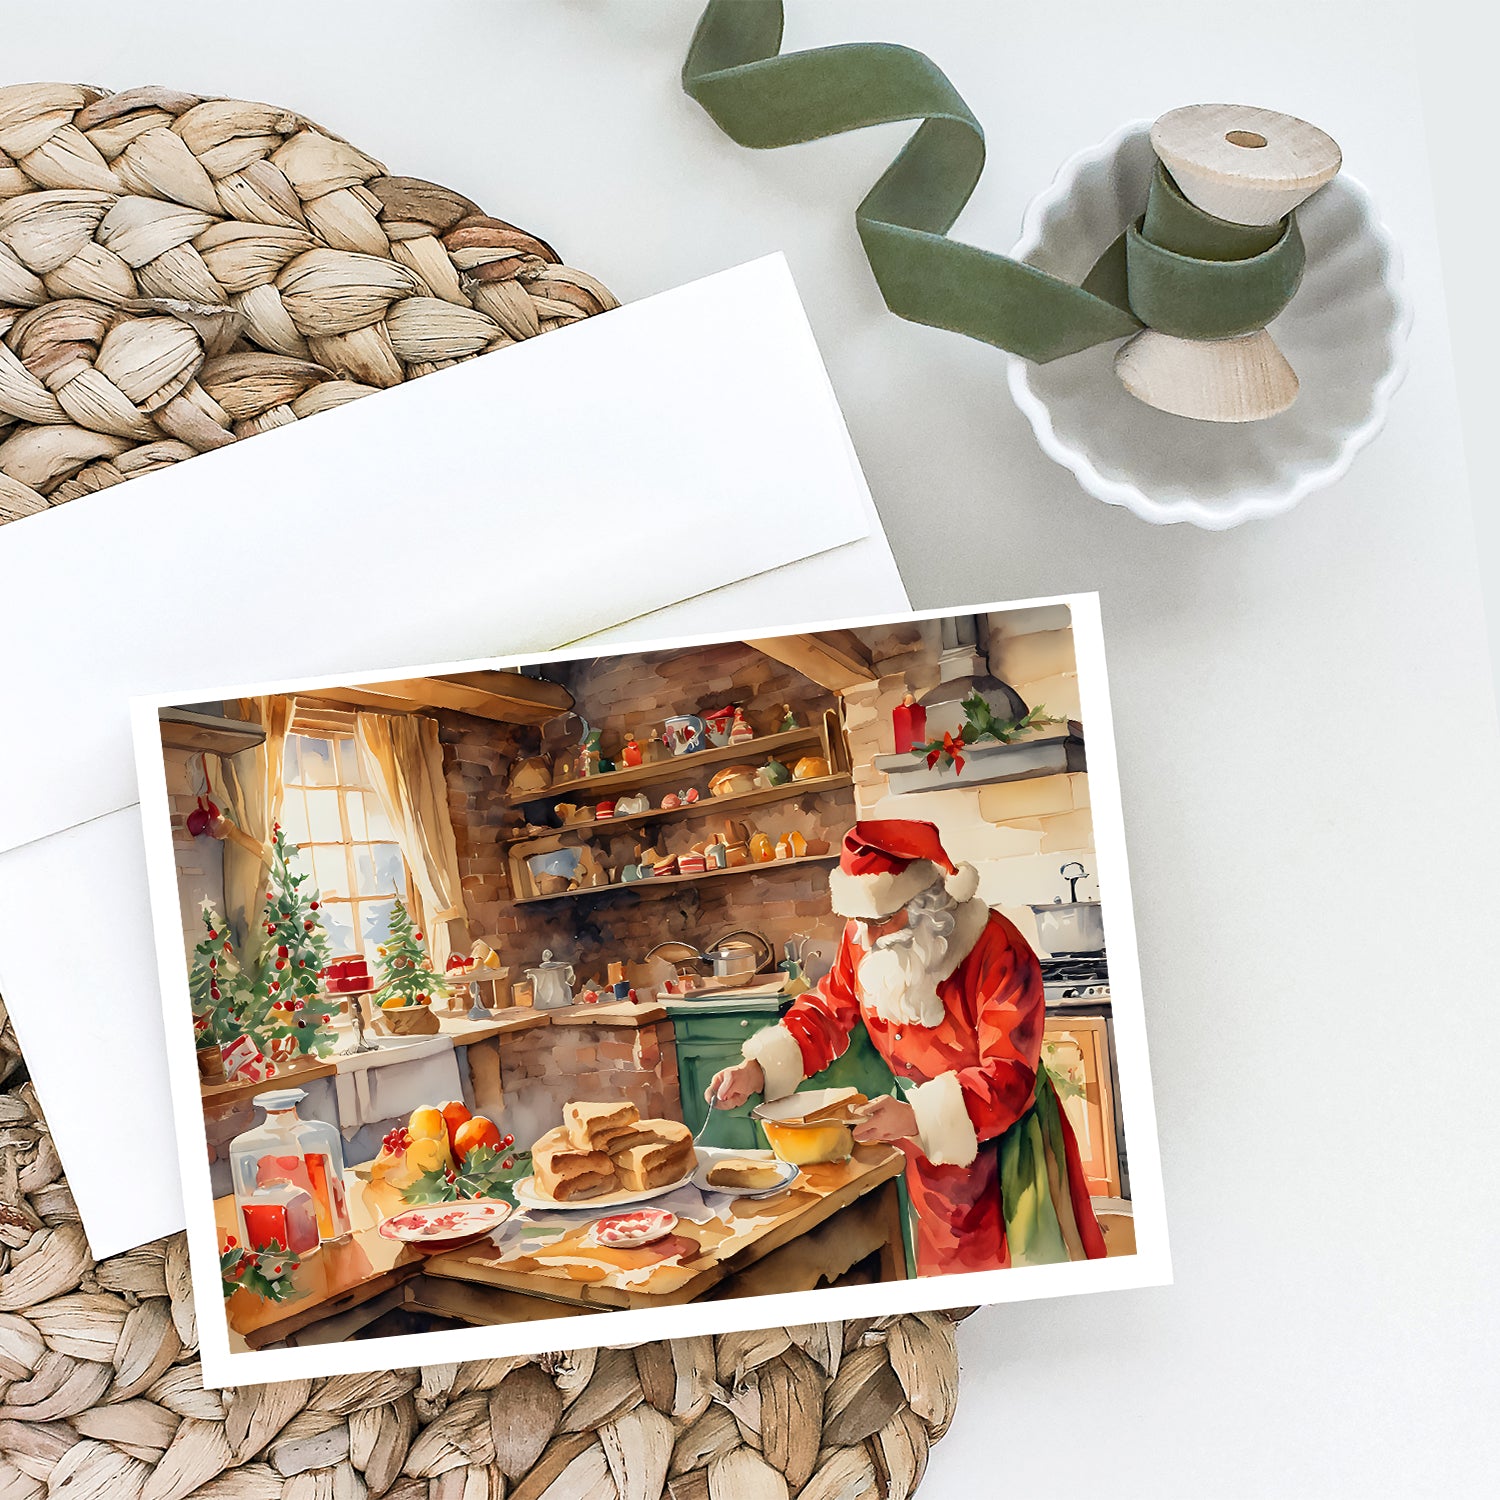 Buy this Cookies with Santa Claus Papa Noel Greeting Cards Pack of 8